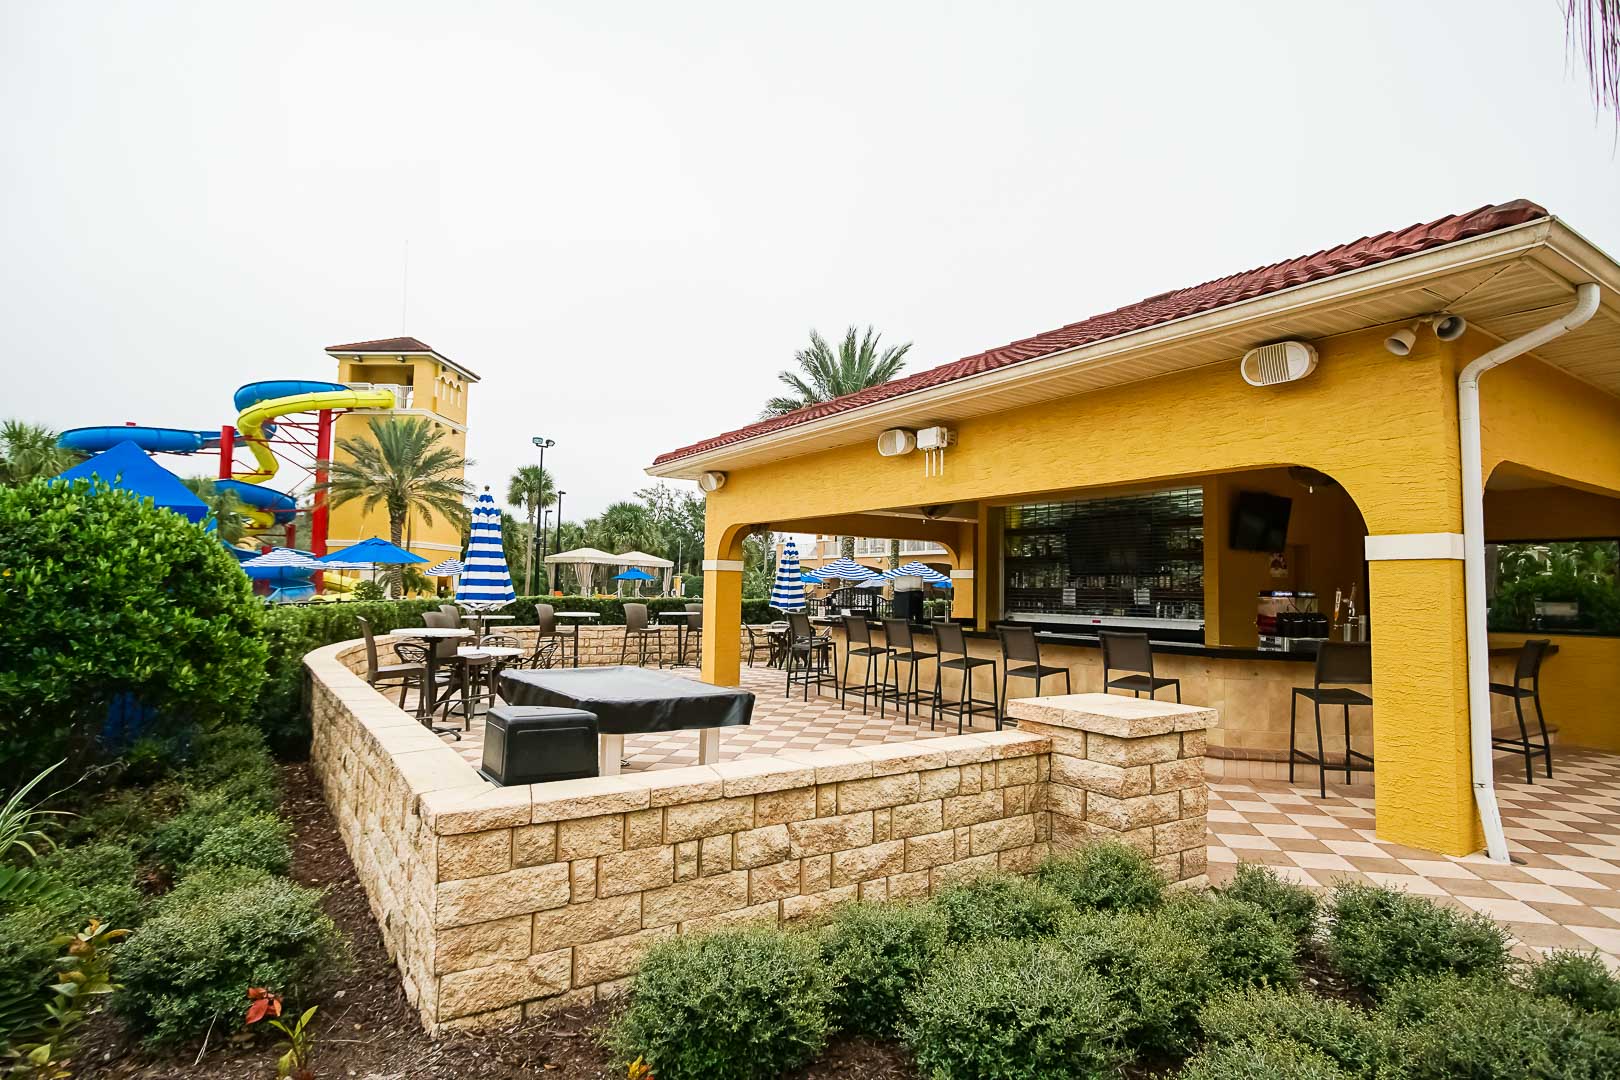 A quaint outdoor bar lounging area at VRI's Fantasy World Resort in Florida.